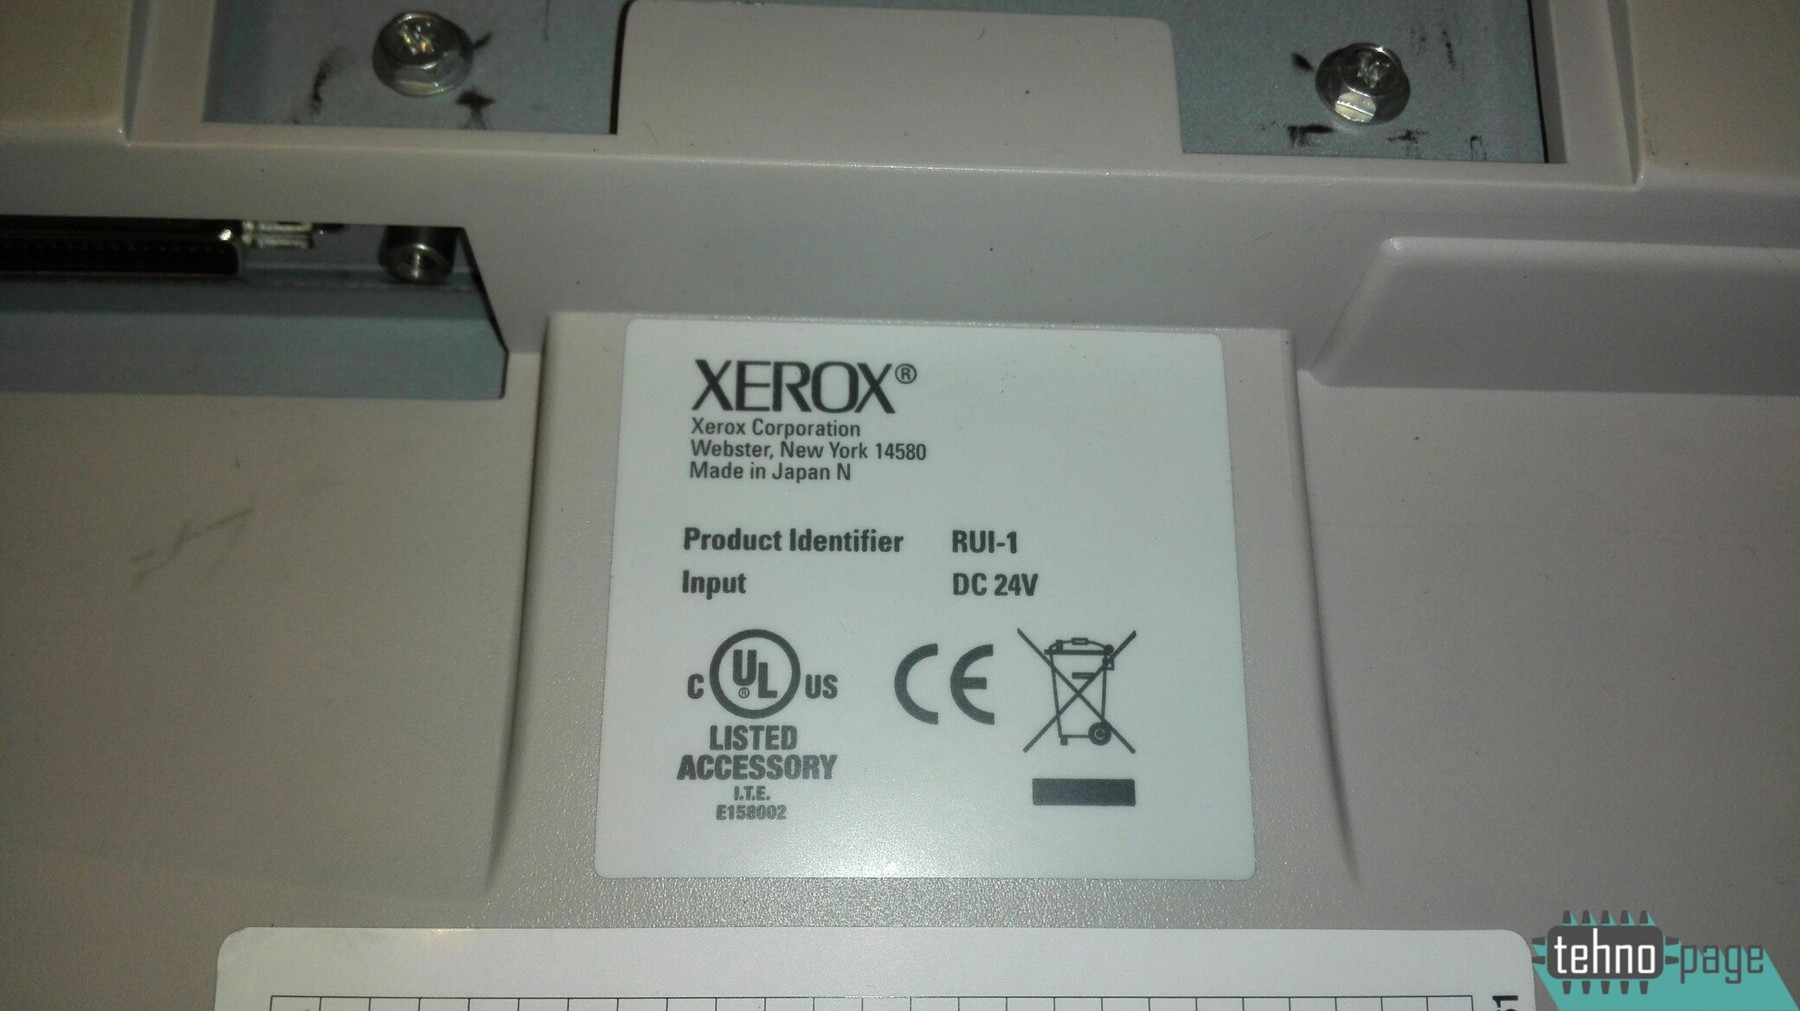 Xerox corporation webster ny 14580 скачать драйвер